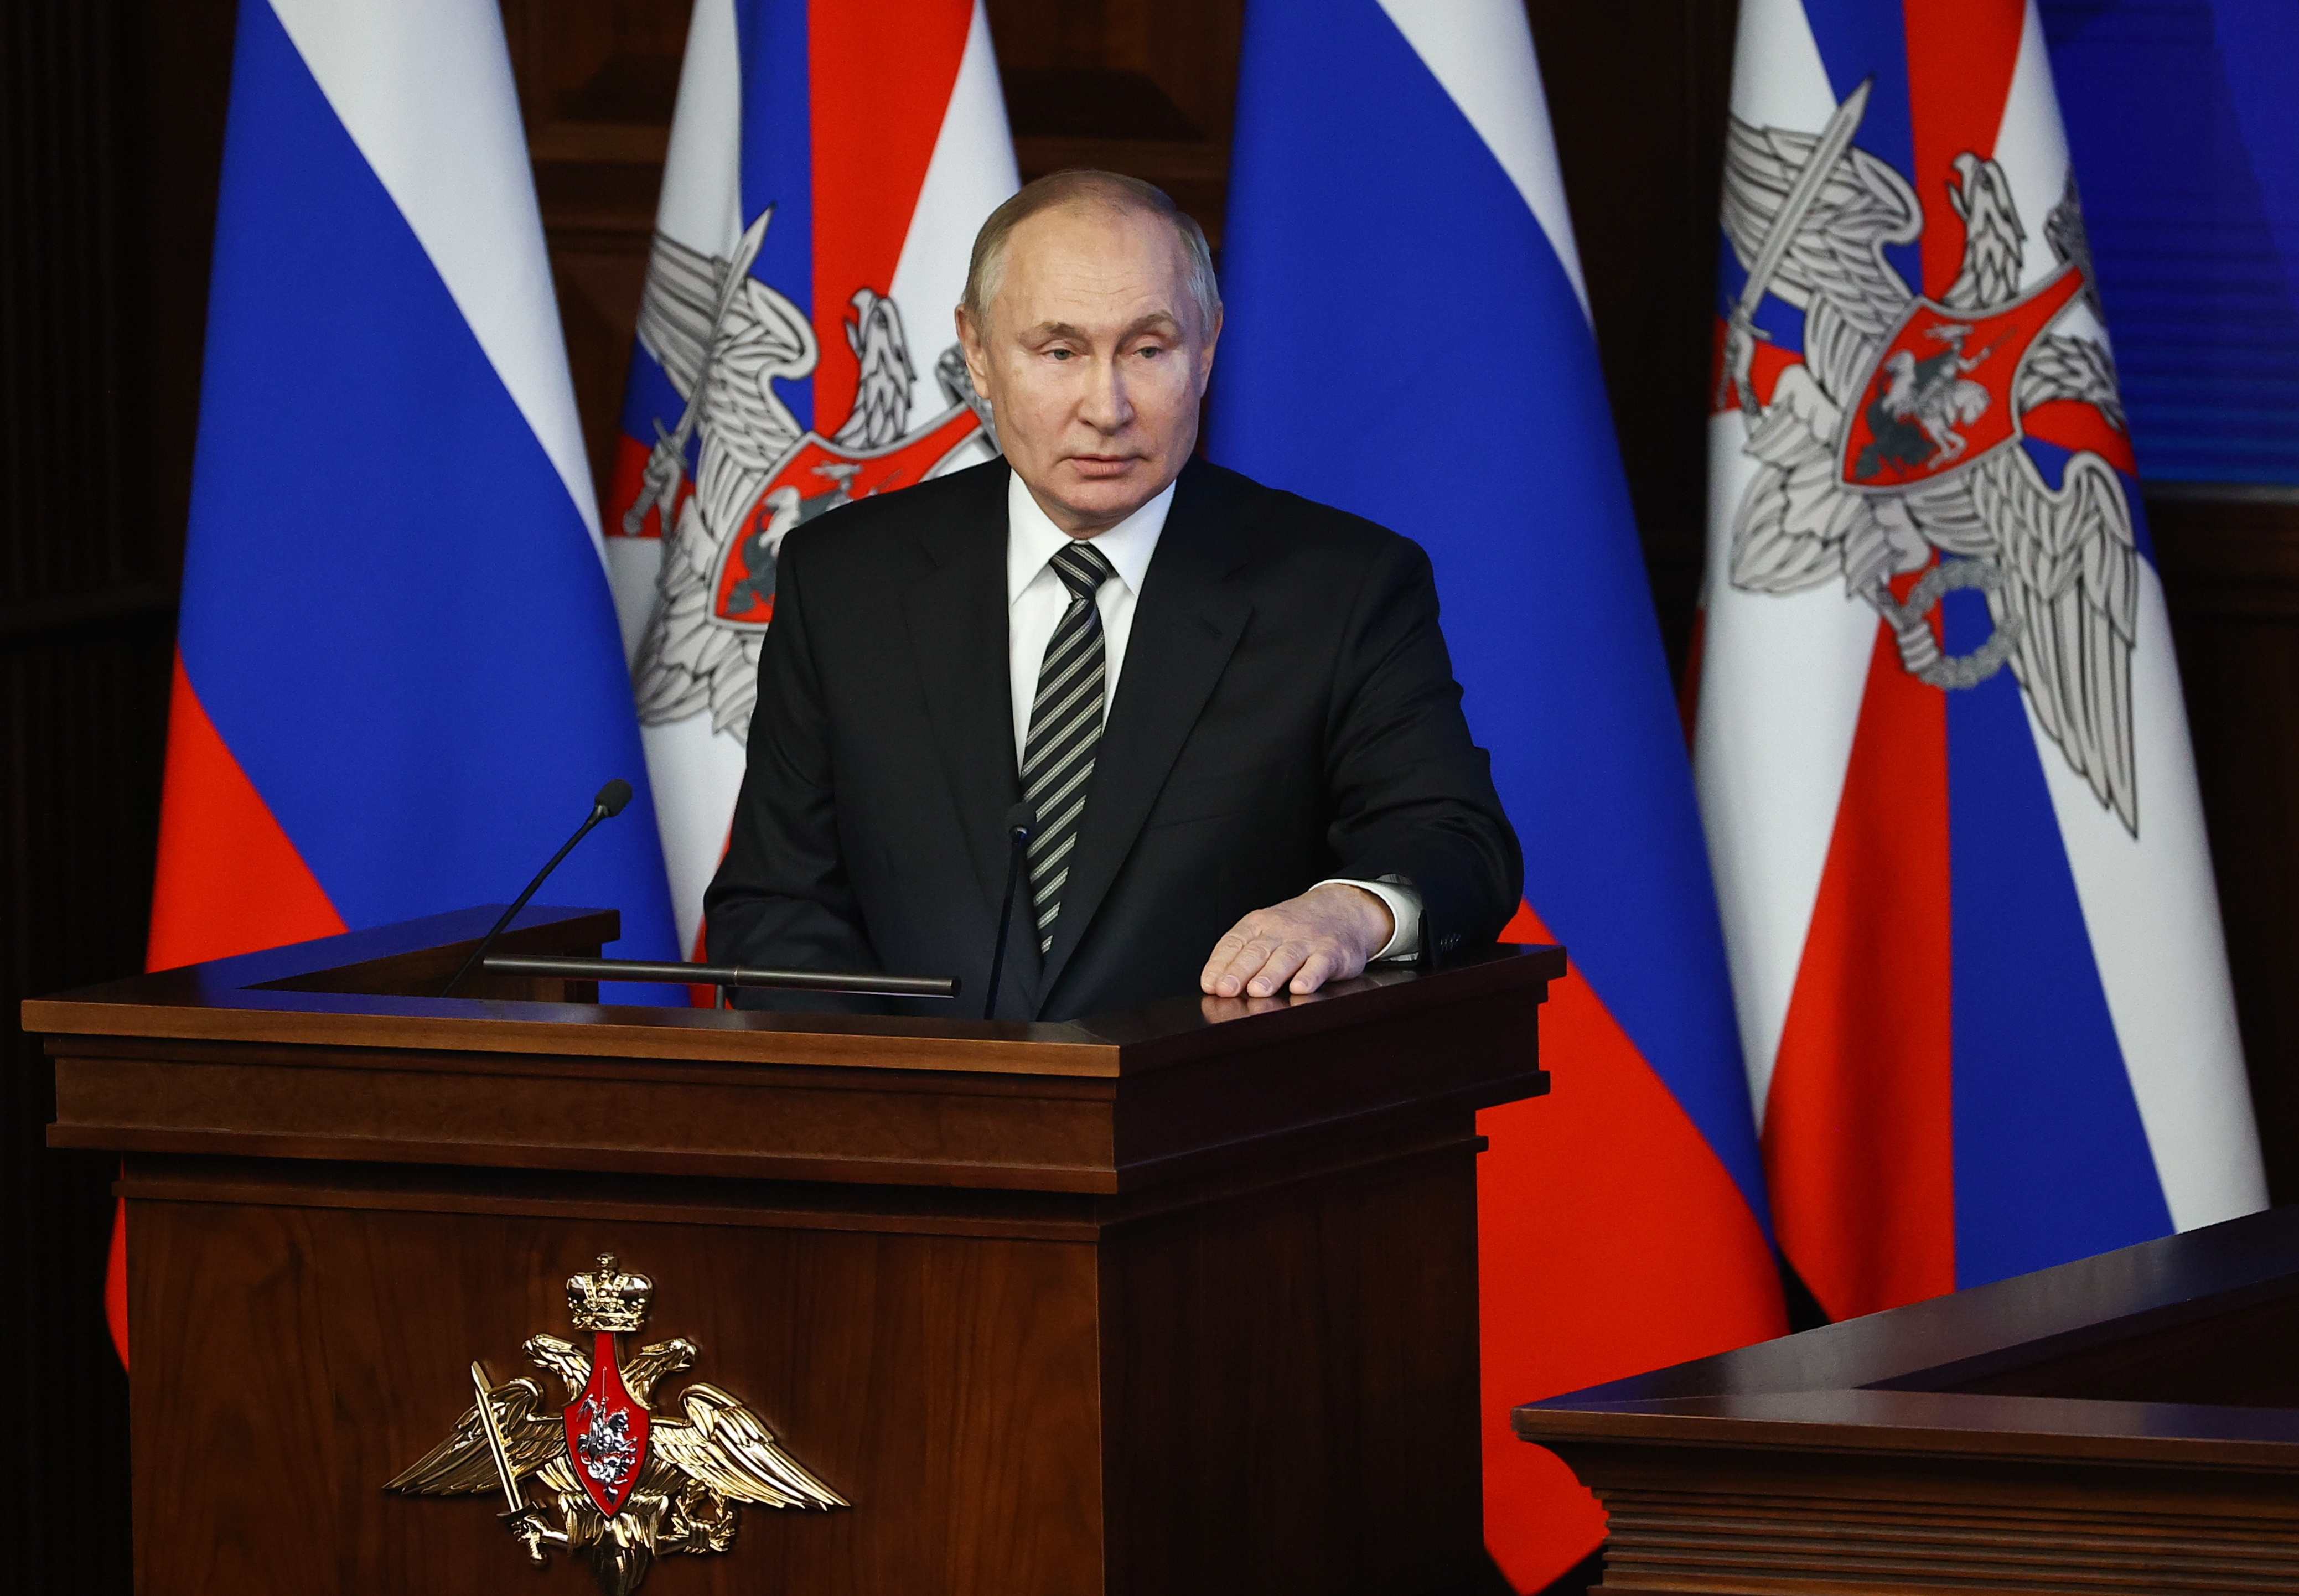 El presidente Vladímir Putin, en una imagen de archivo. EFE/EPA/MIKHAIL TERESHCHENKO / KREMLIN POOL / SPUTNIK
